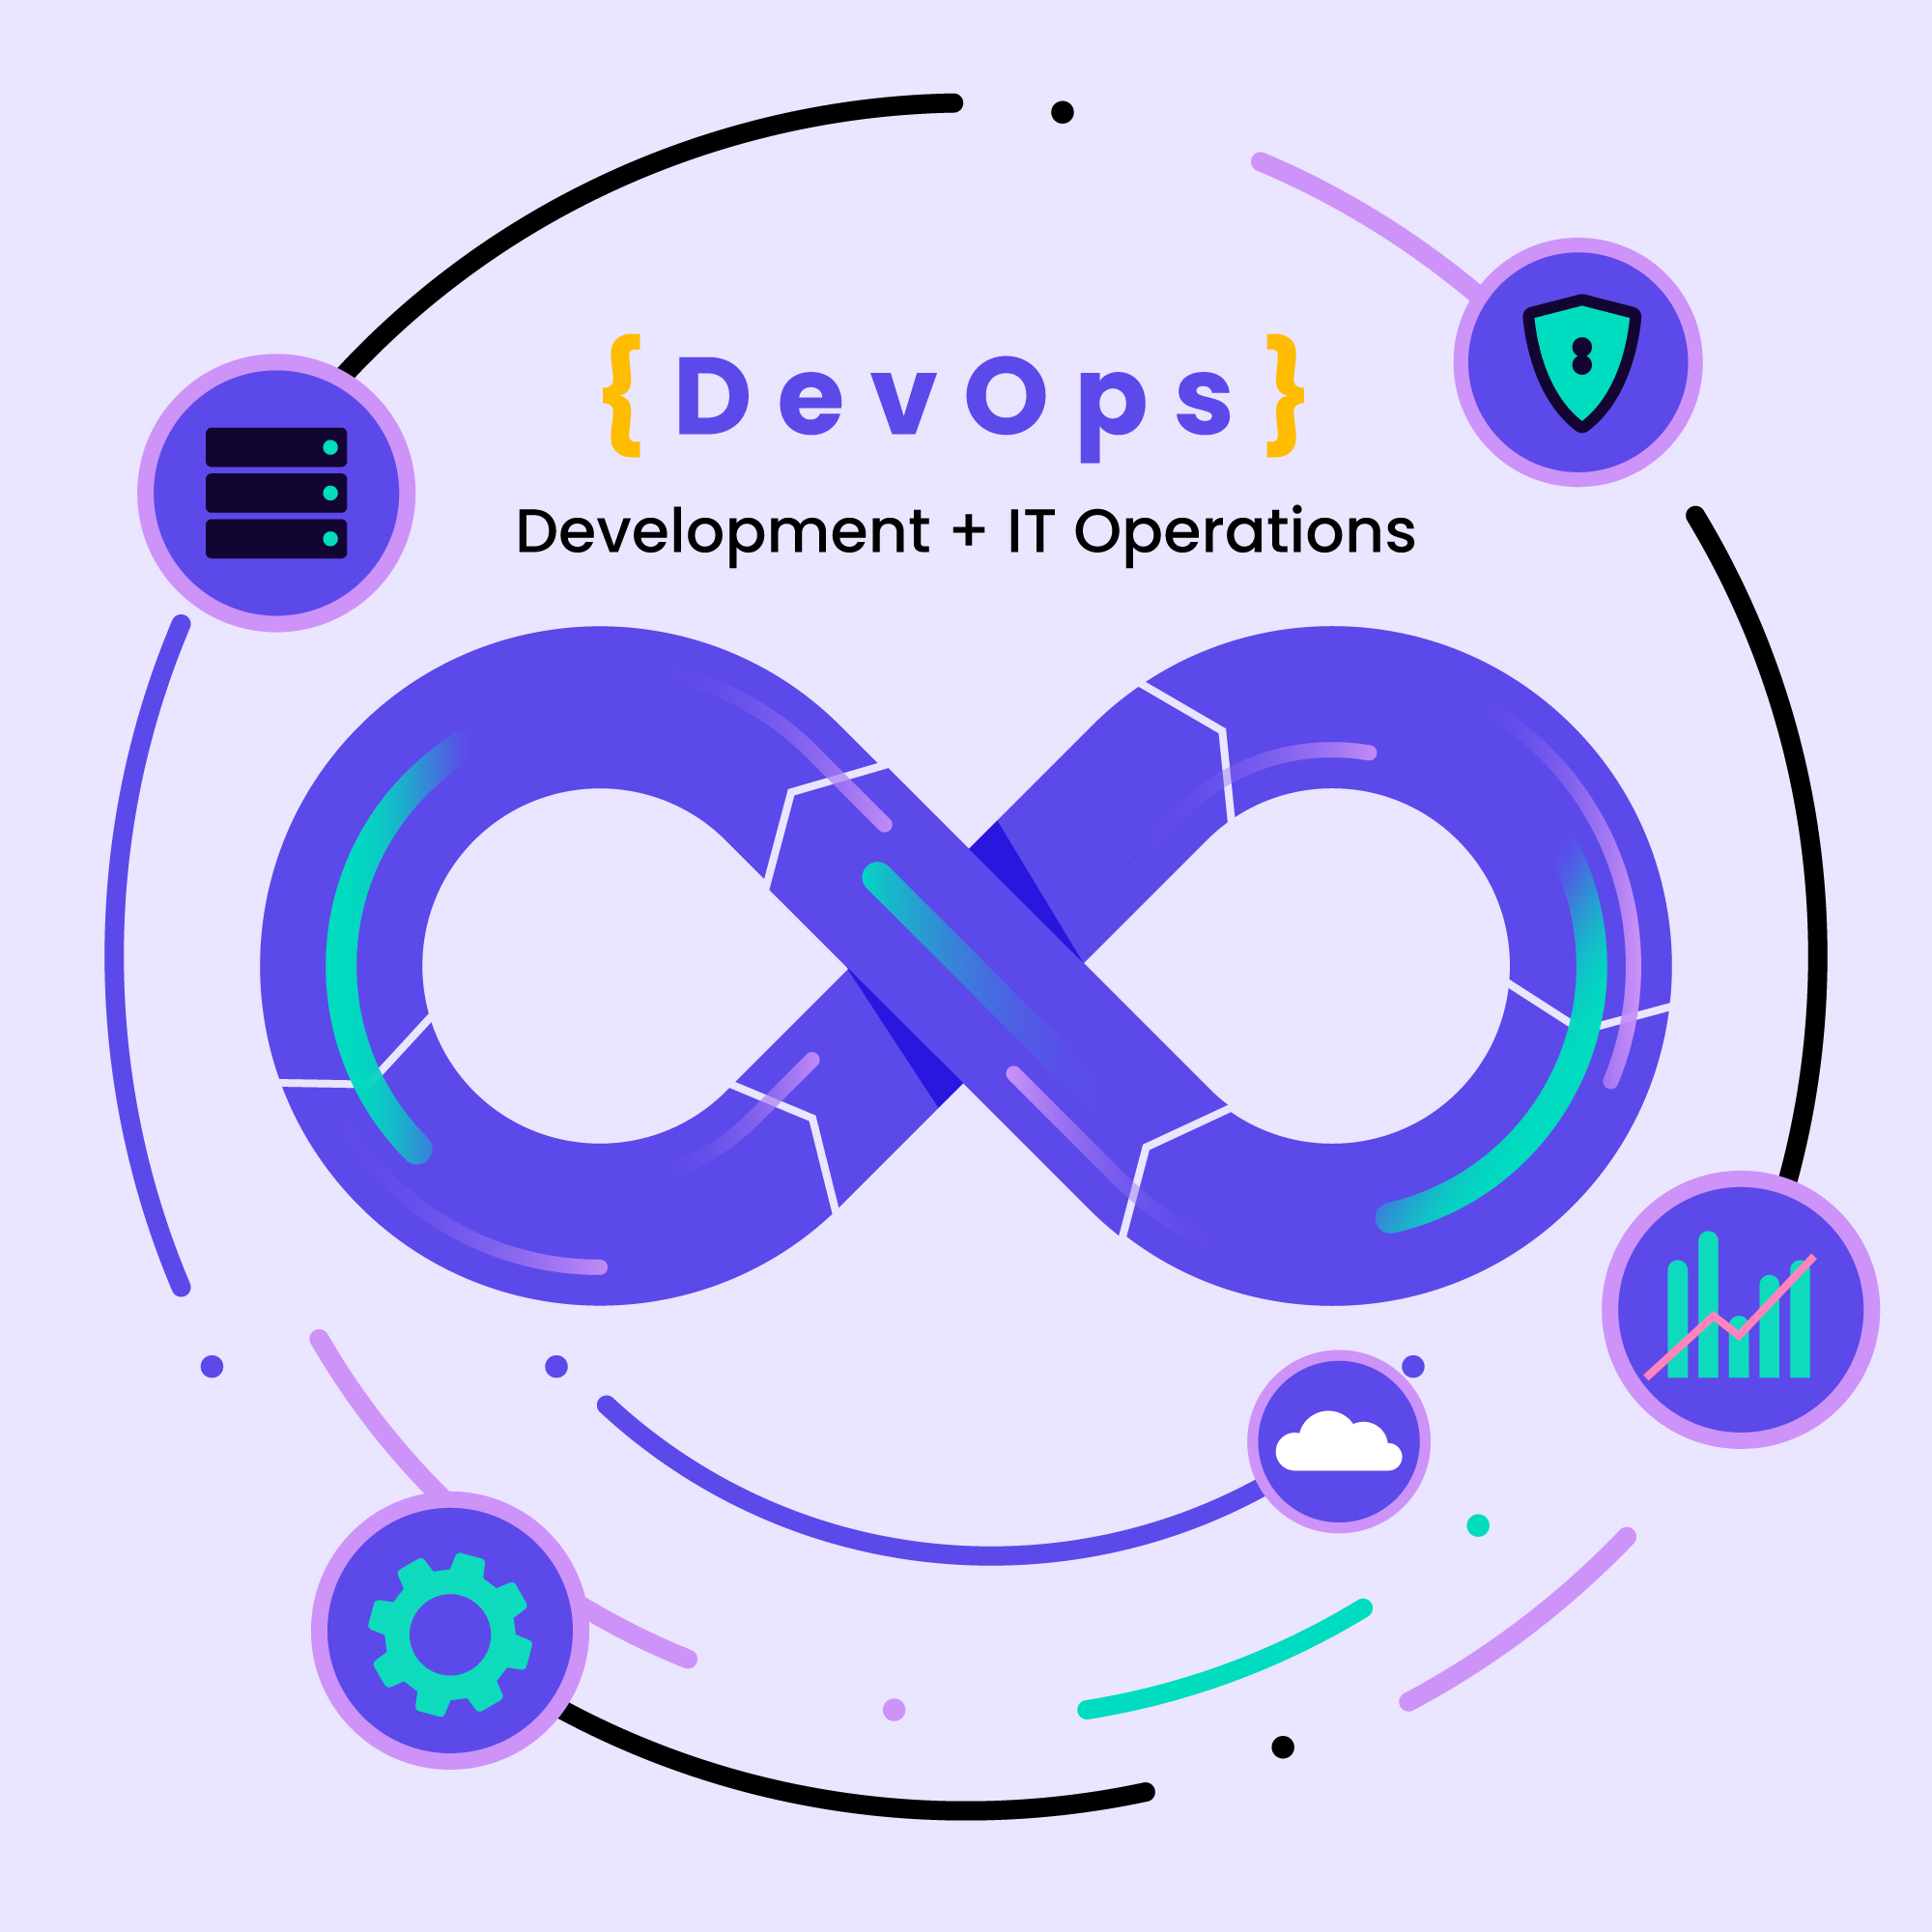 DevOps infinity loop represents the never-ending DevOps release management.